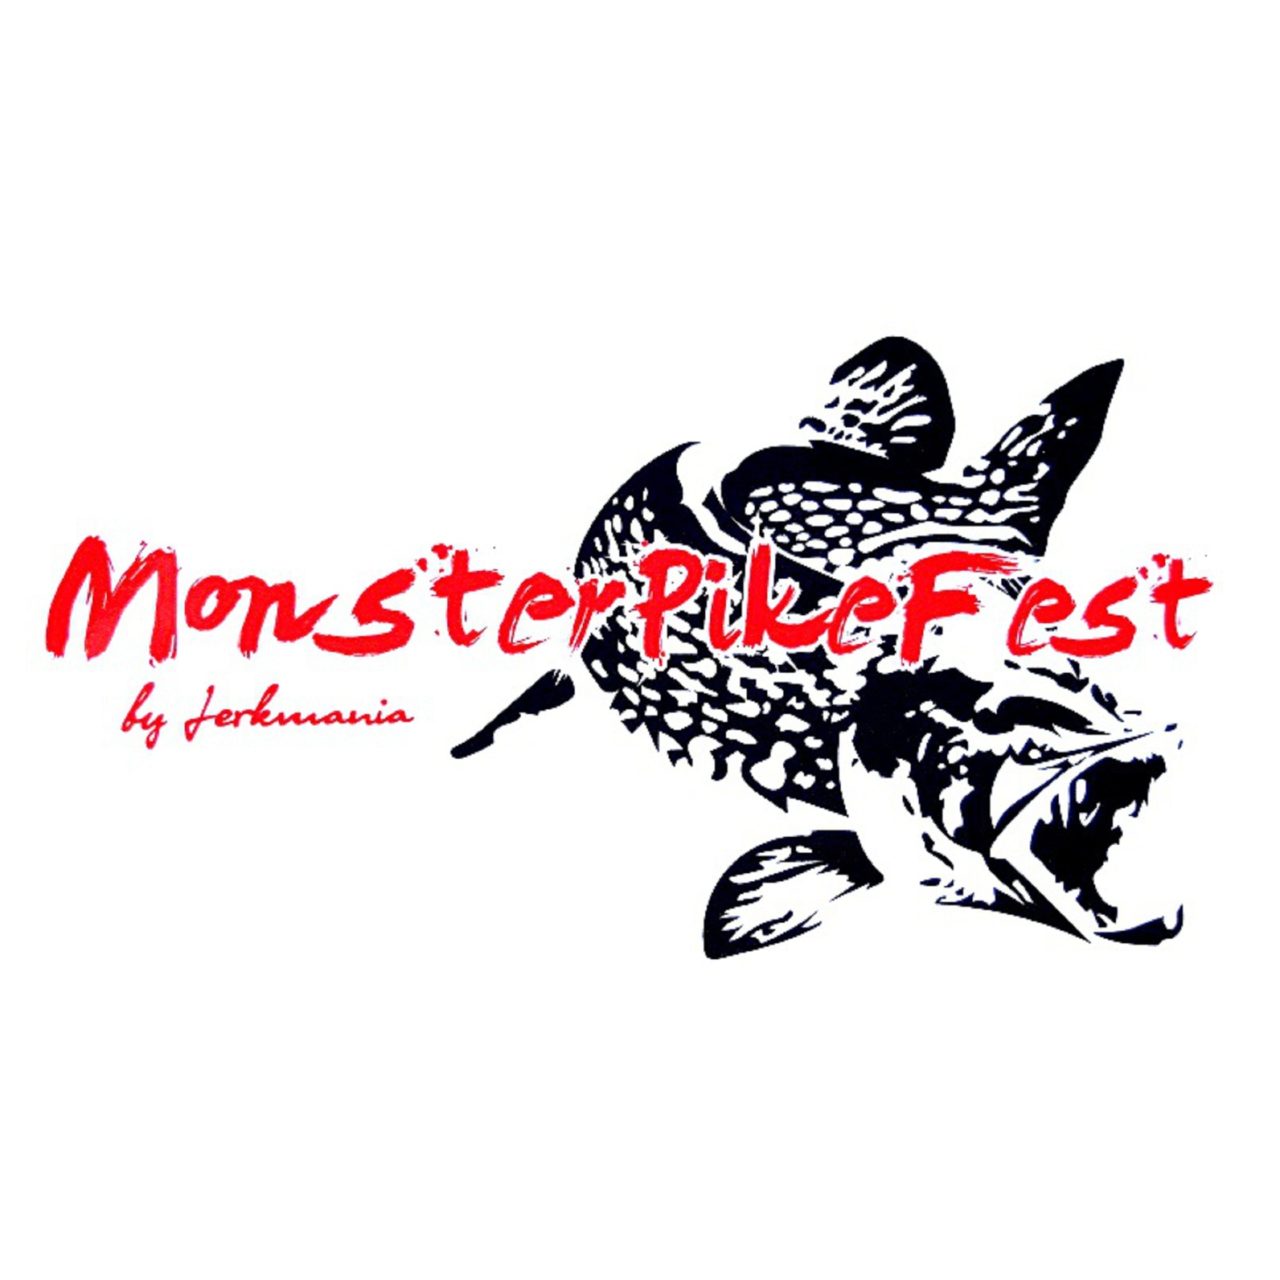 Стикер Monster Pike Fest 2016